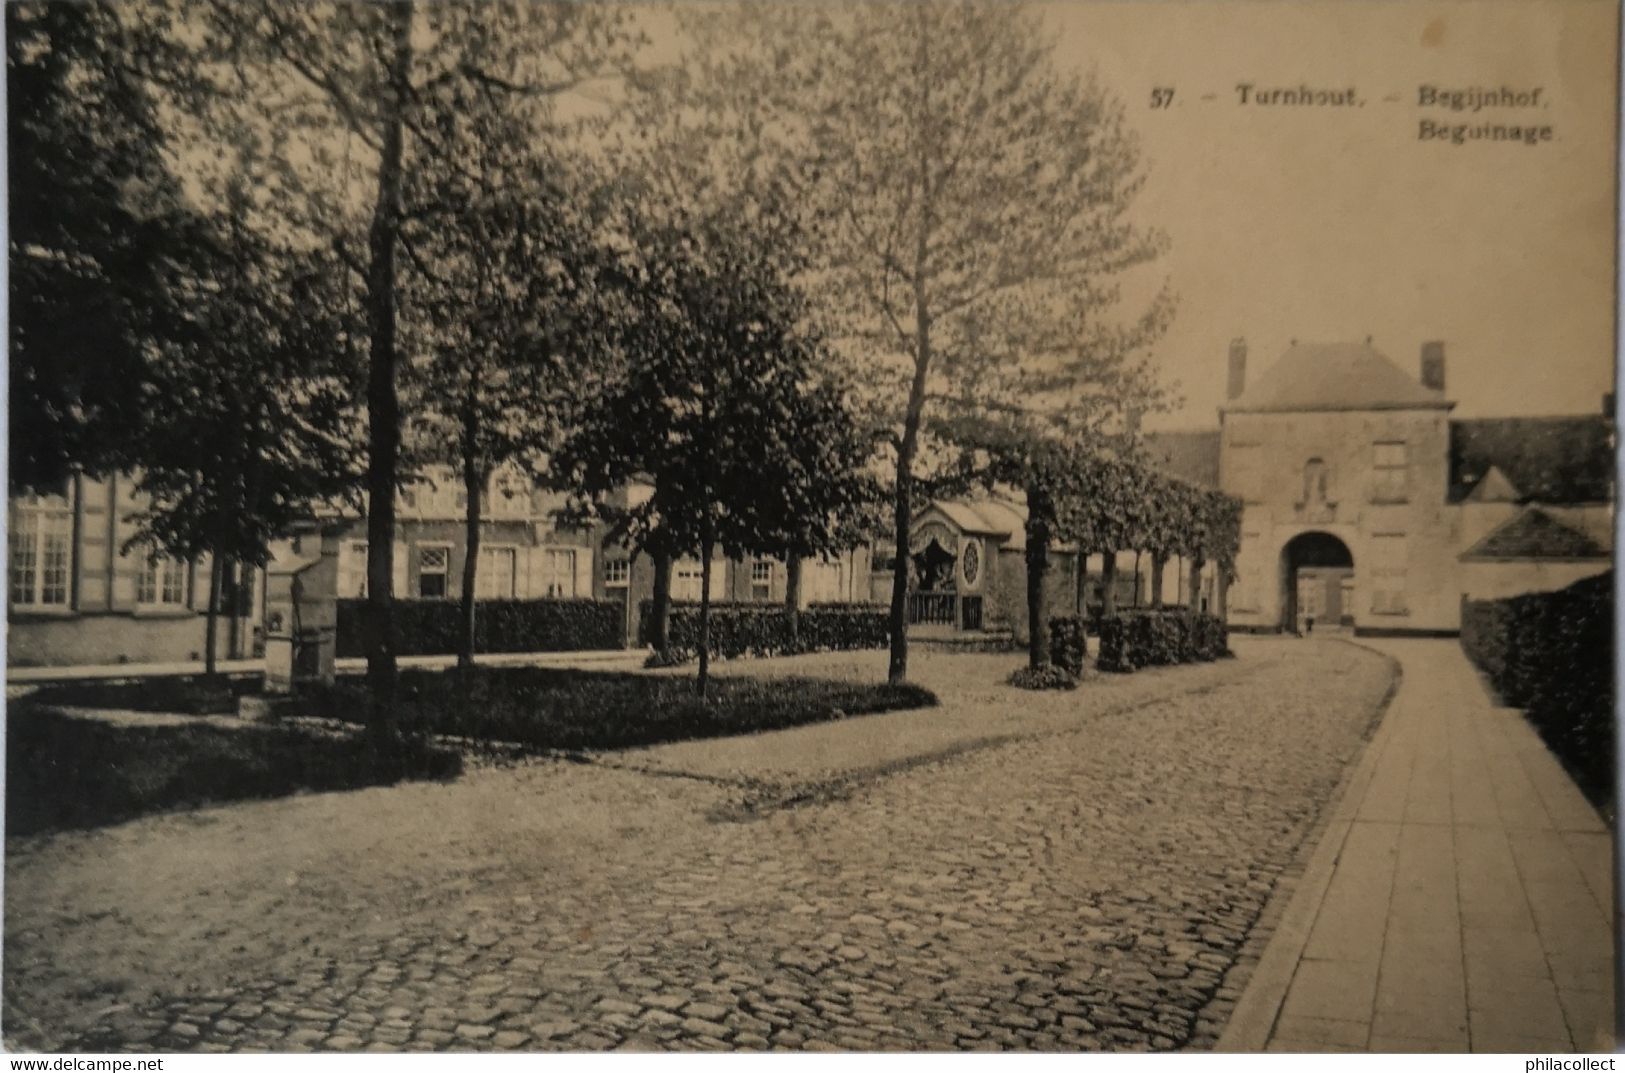 Turnhout // Begijnhof - Beguinage 19?? - Turnhout